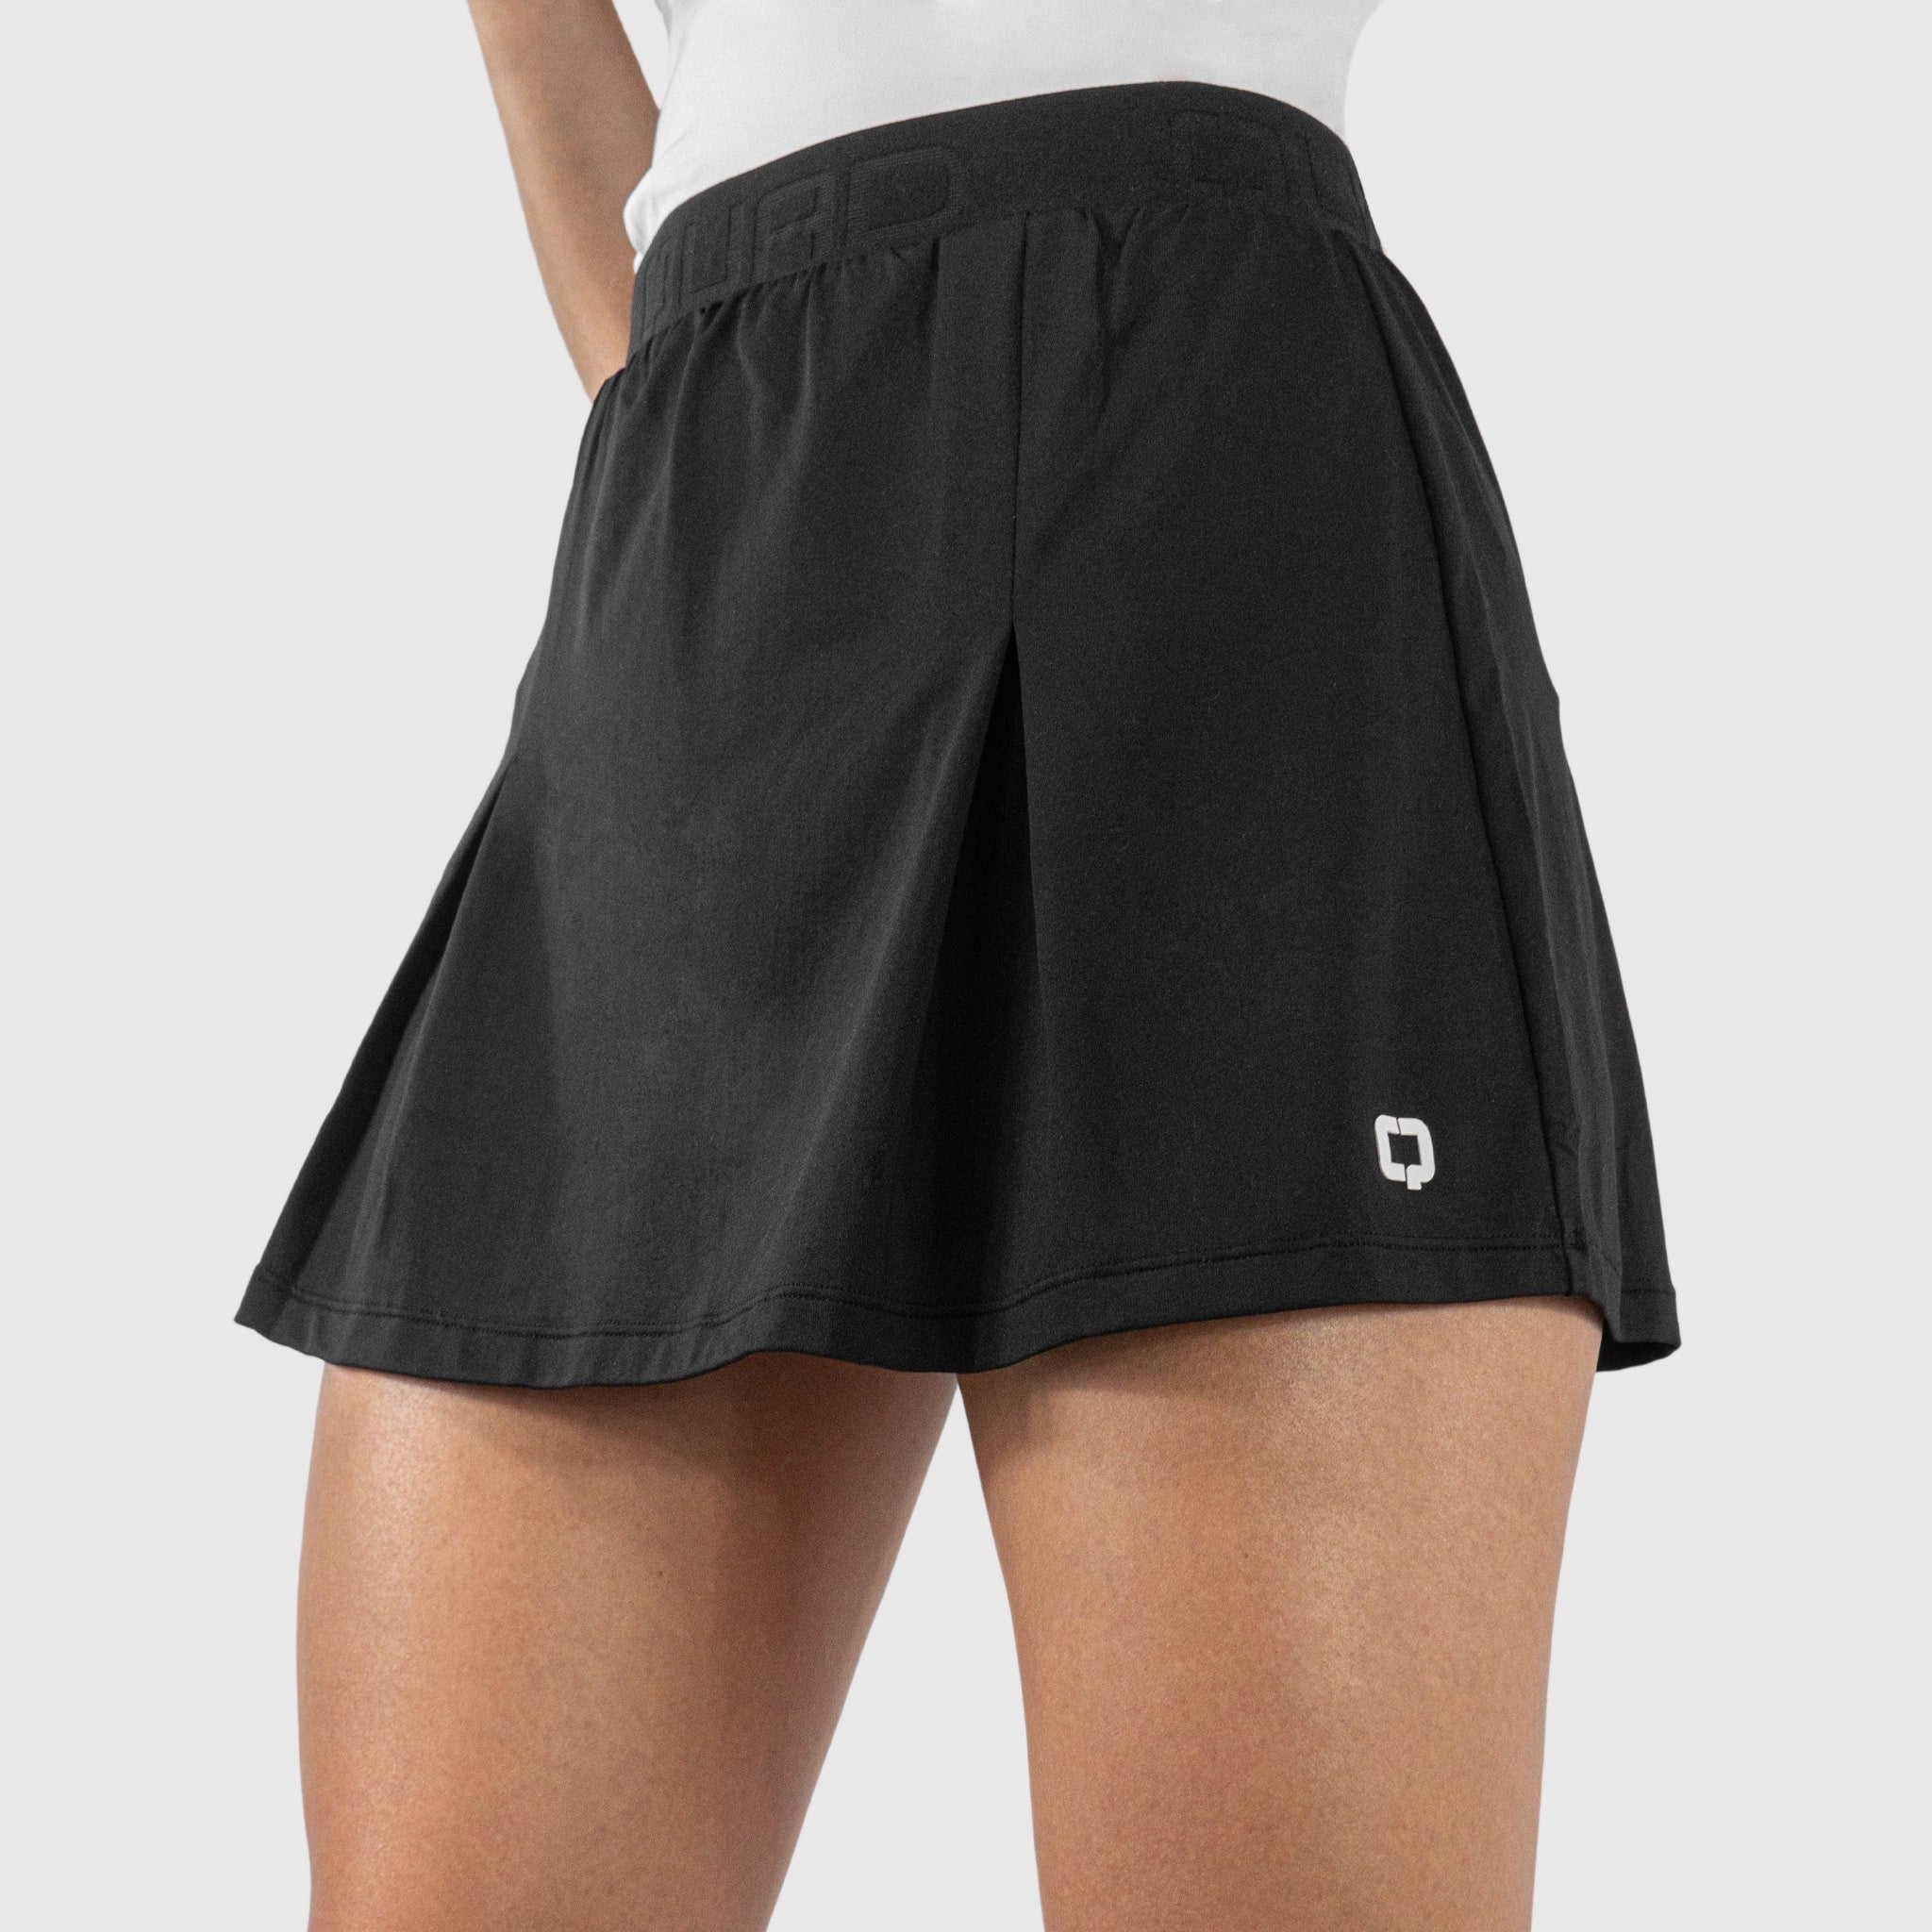 Quad Padel Skirt black front view